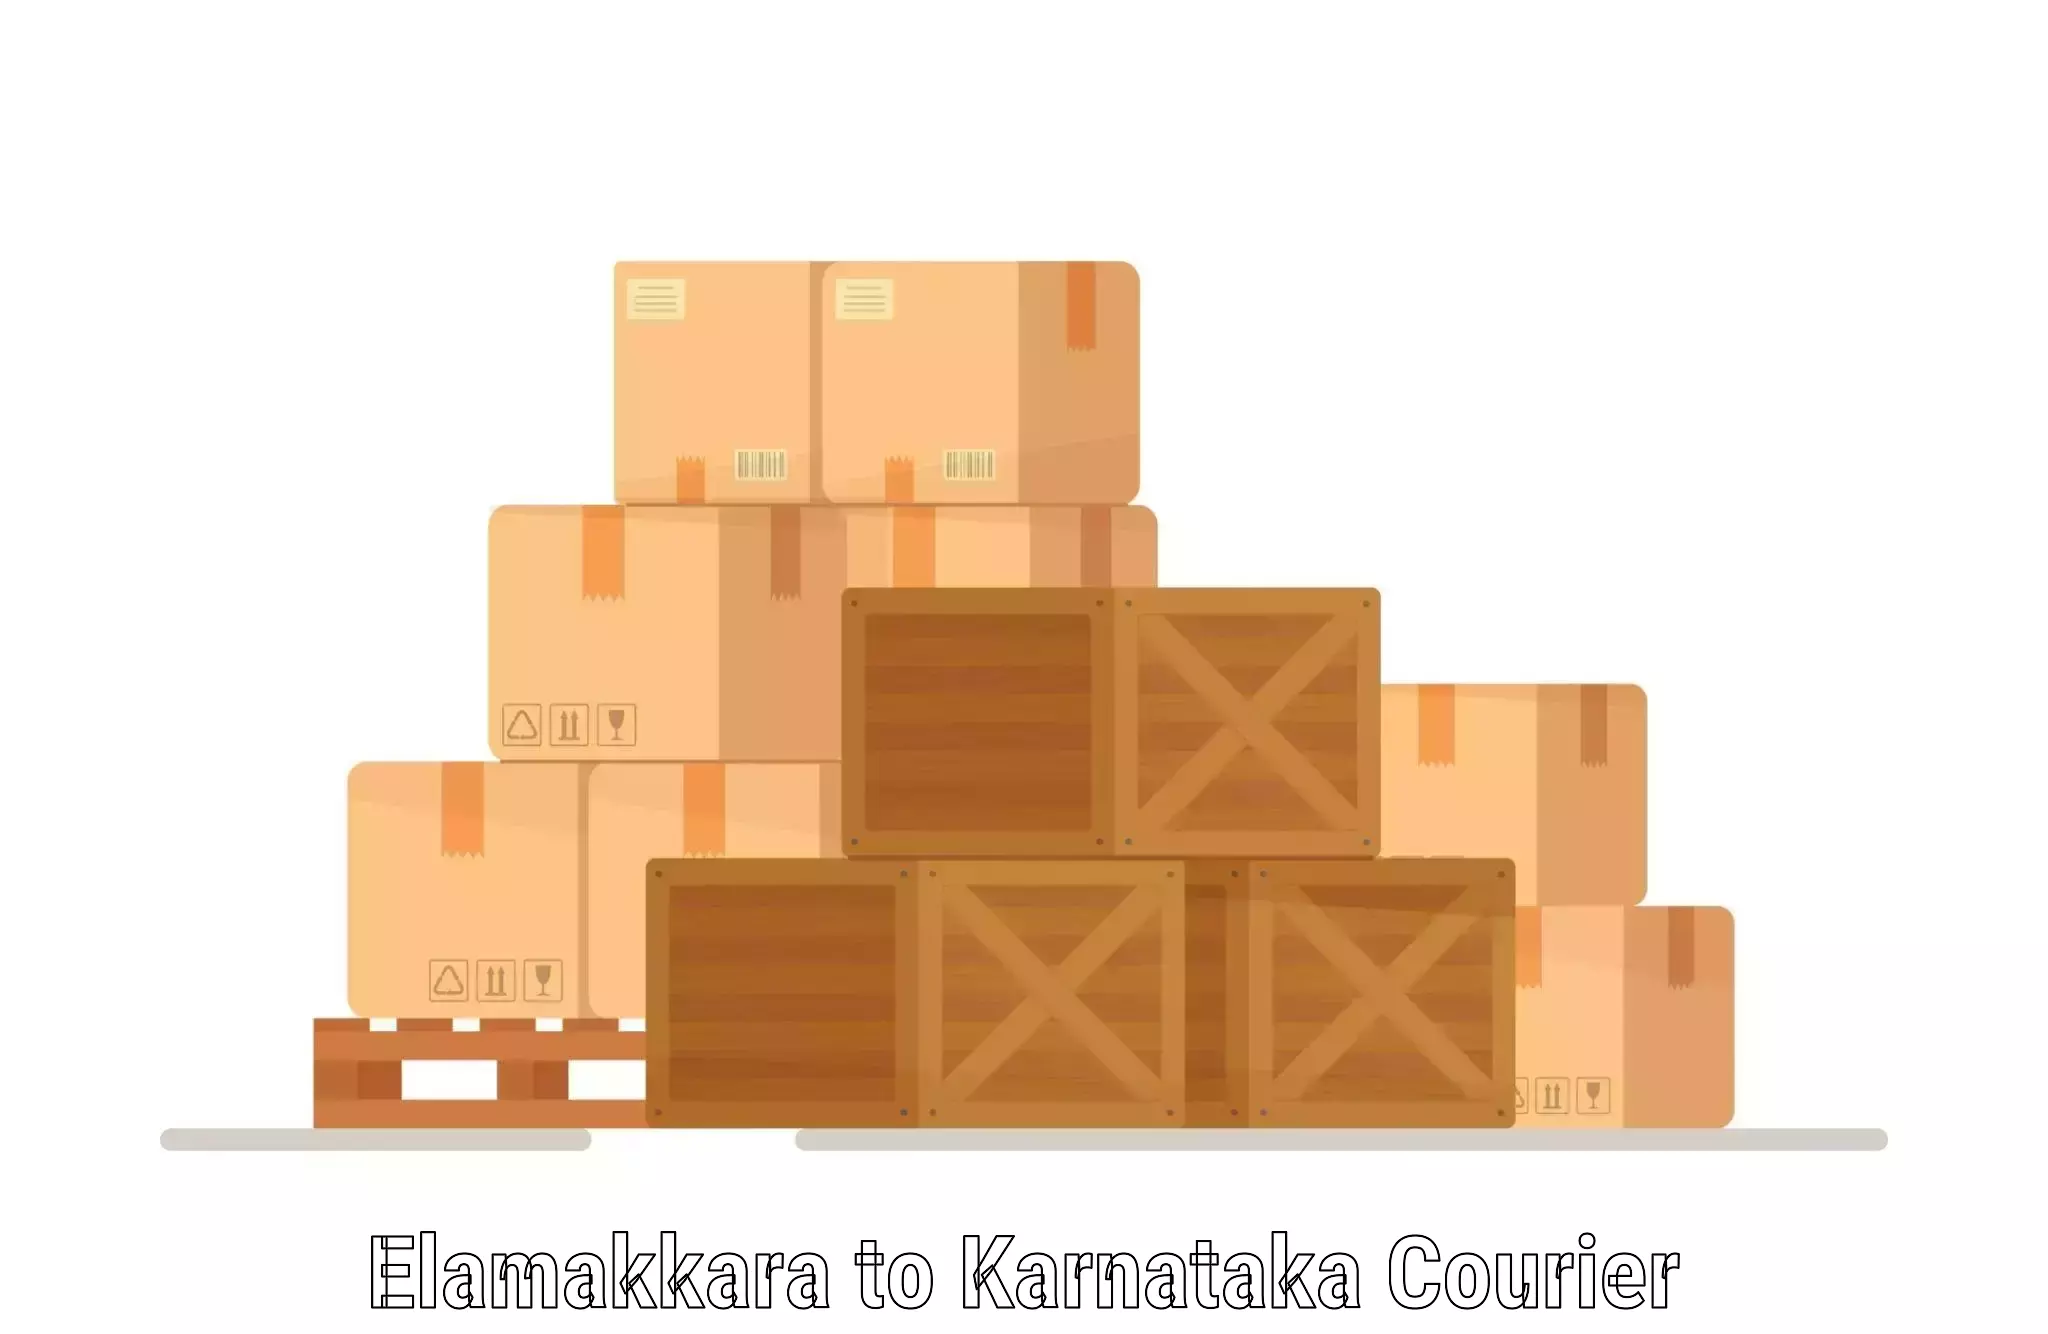 Enhanced shipping experience Elamakkara to Bagaluru